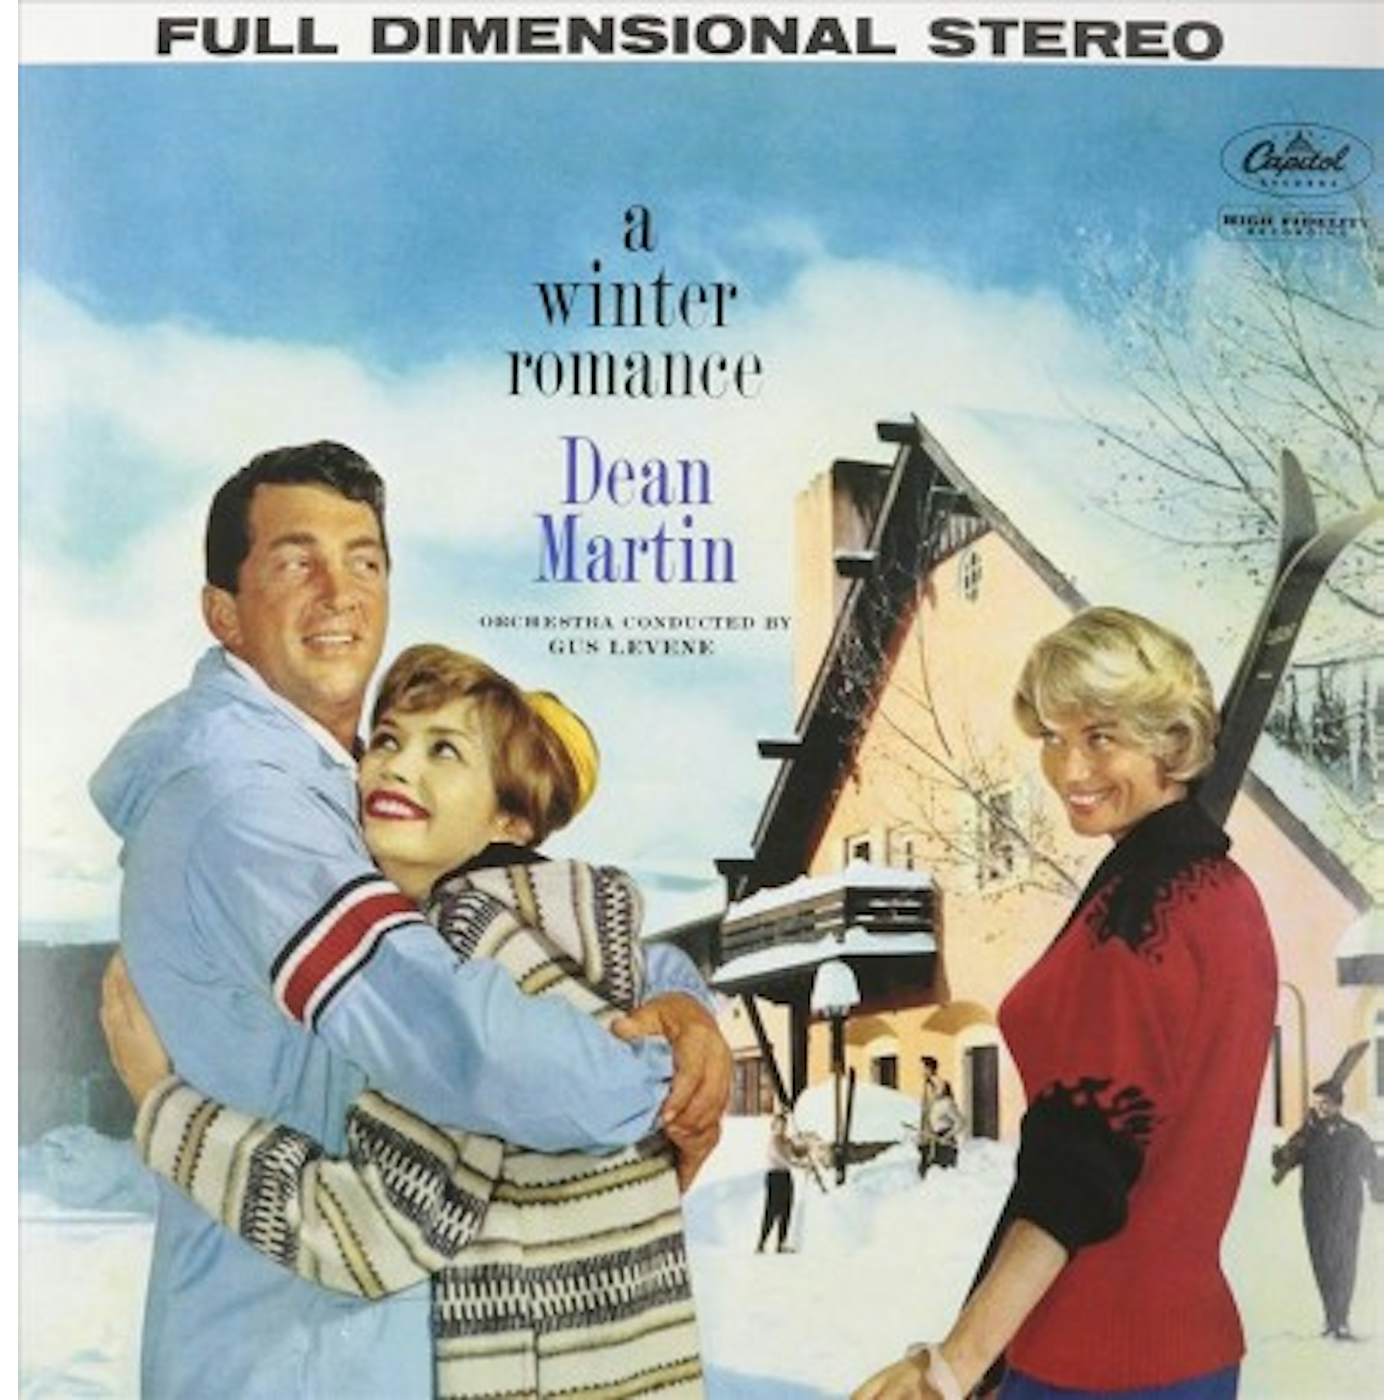 Dean Martin WINTER ROMANCE Vinyl Record